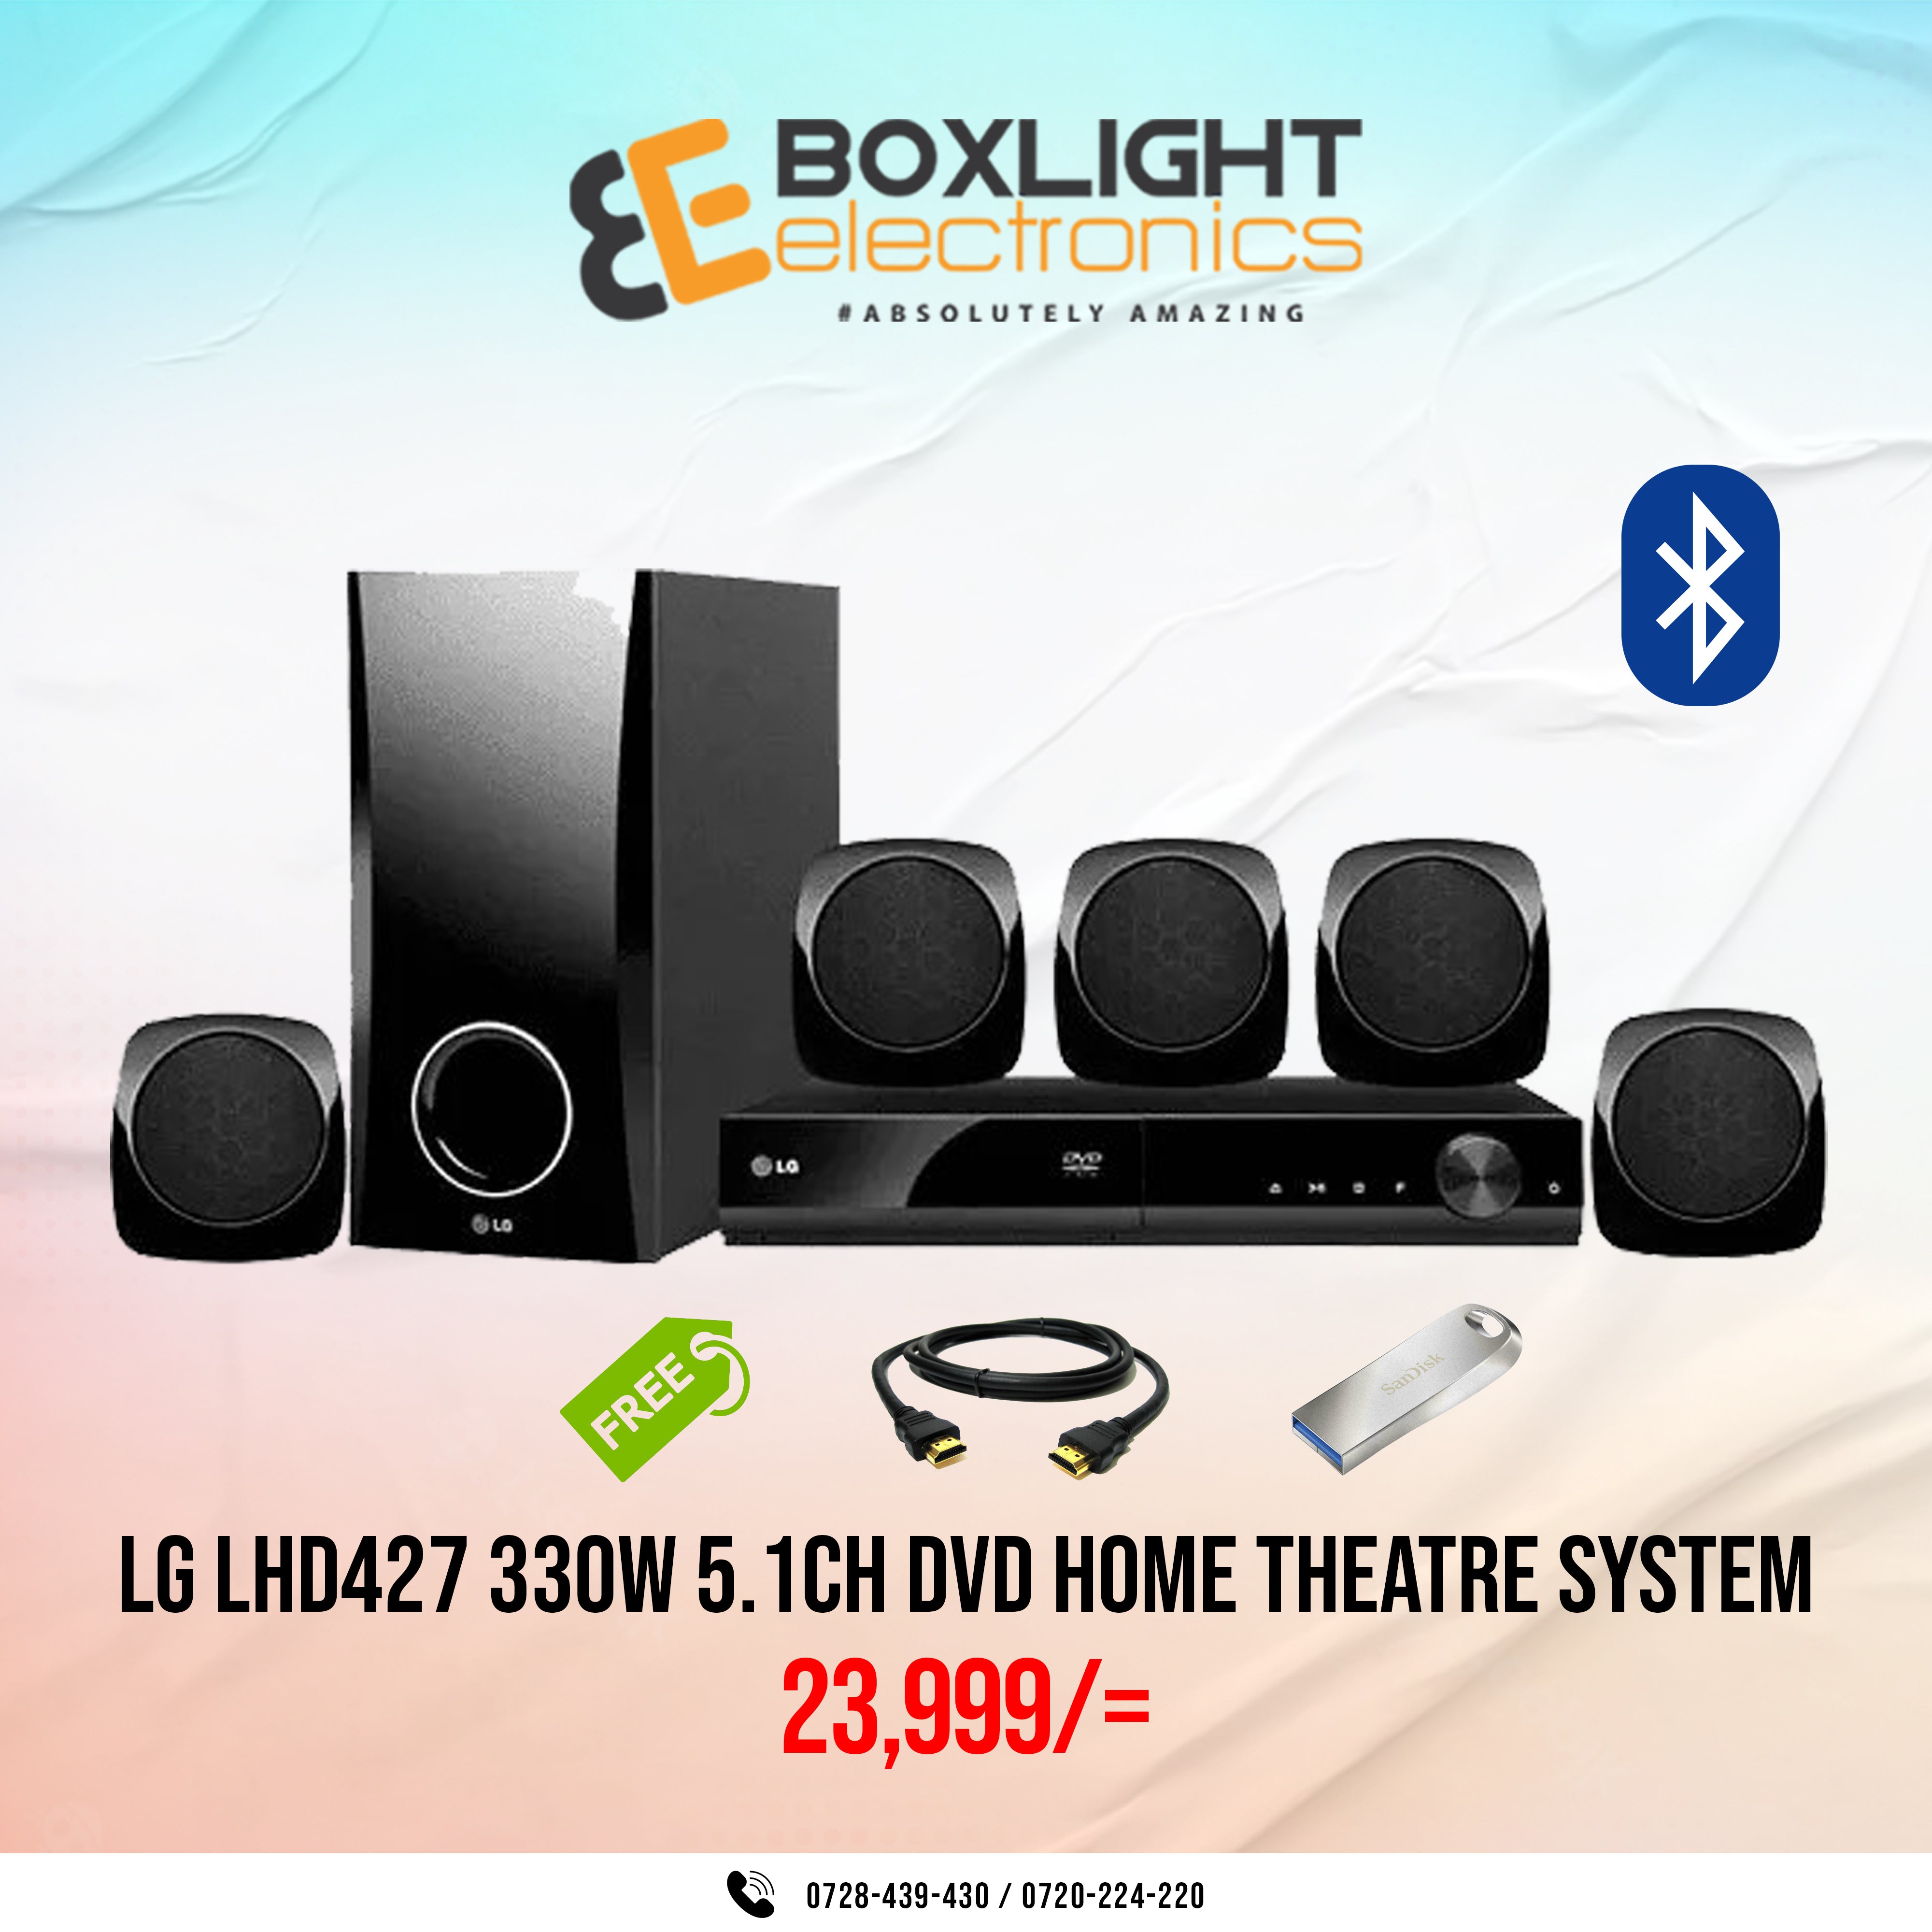 LG LHD427 330W 5.1Ch DVD Home Theatre System